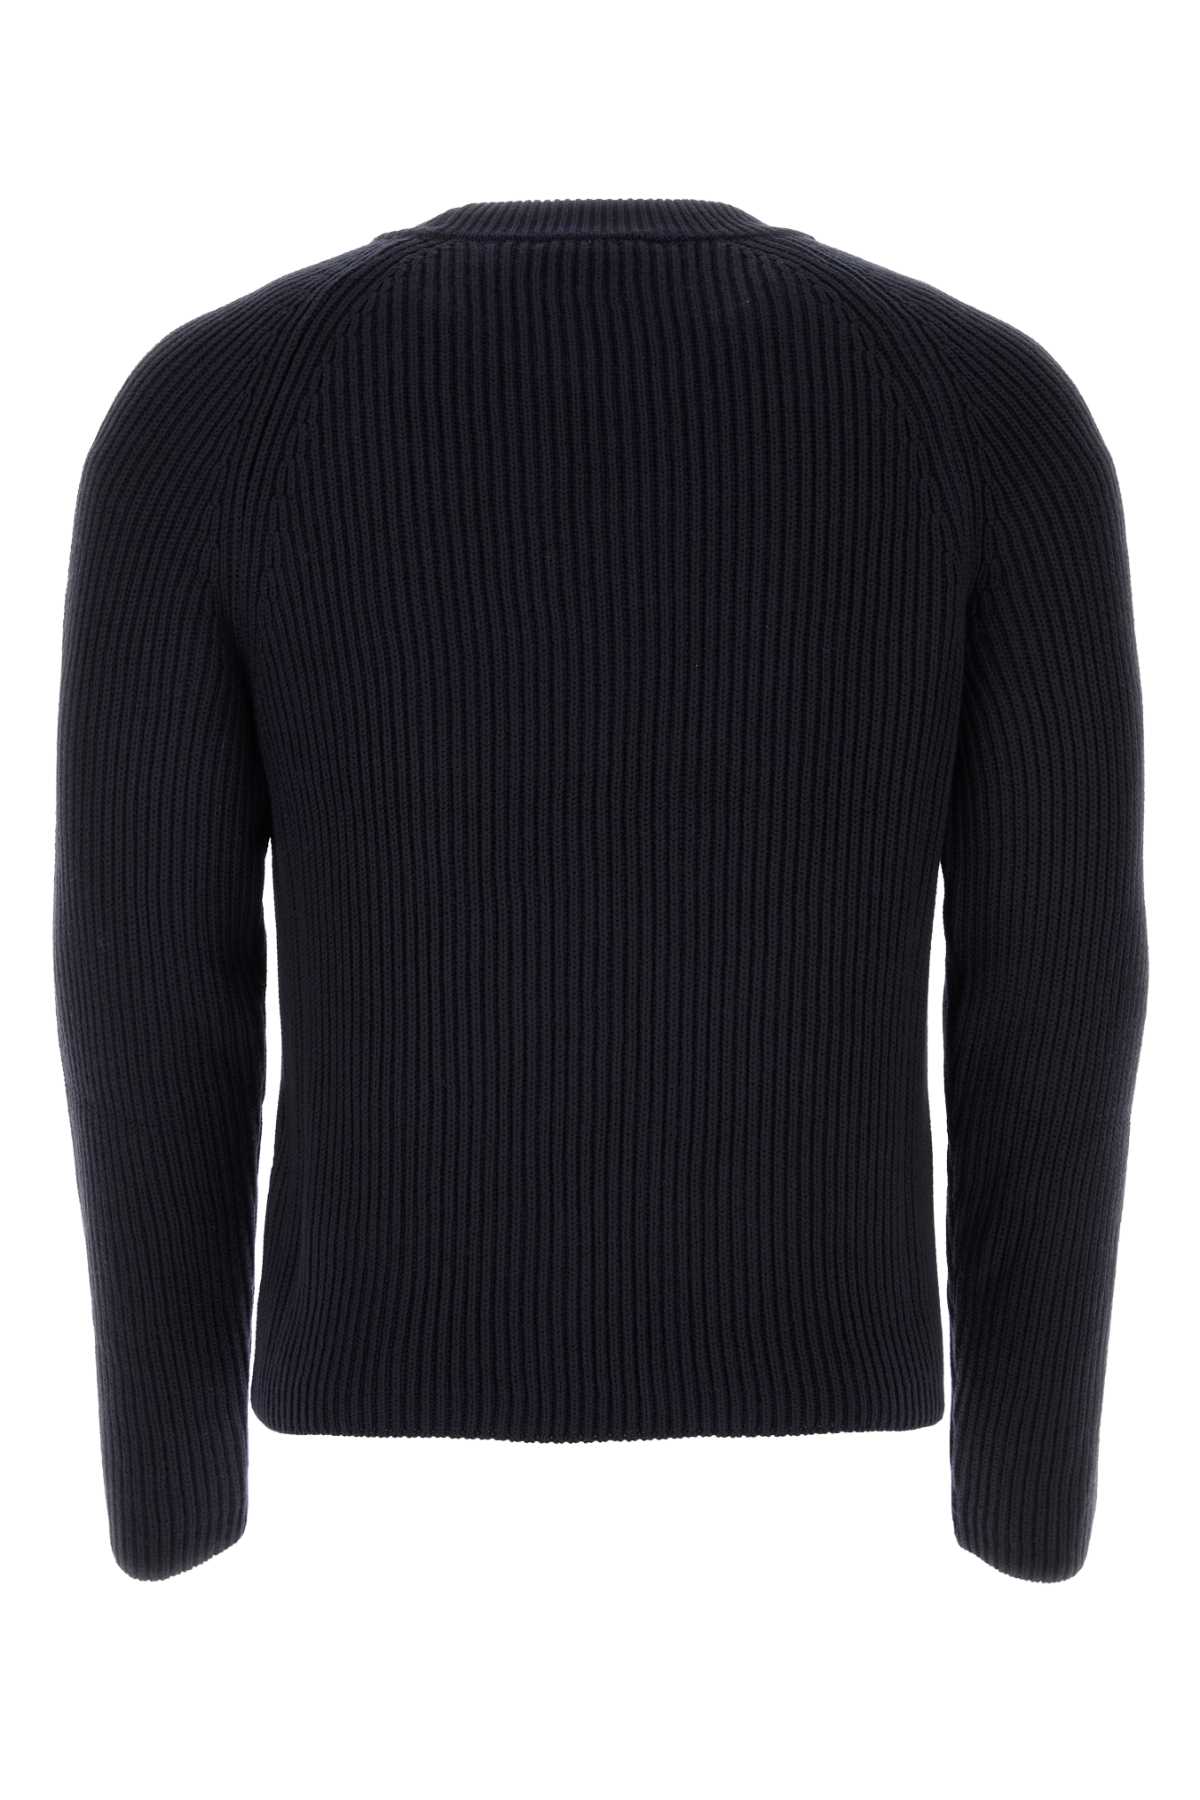 Ami Alexandre Mattiussi Midnight Blue Cotton Blend Sweater In Nightblue